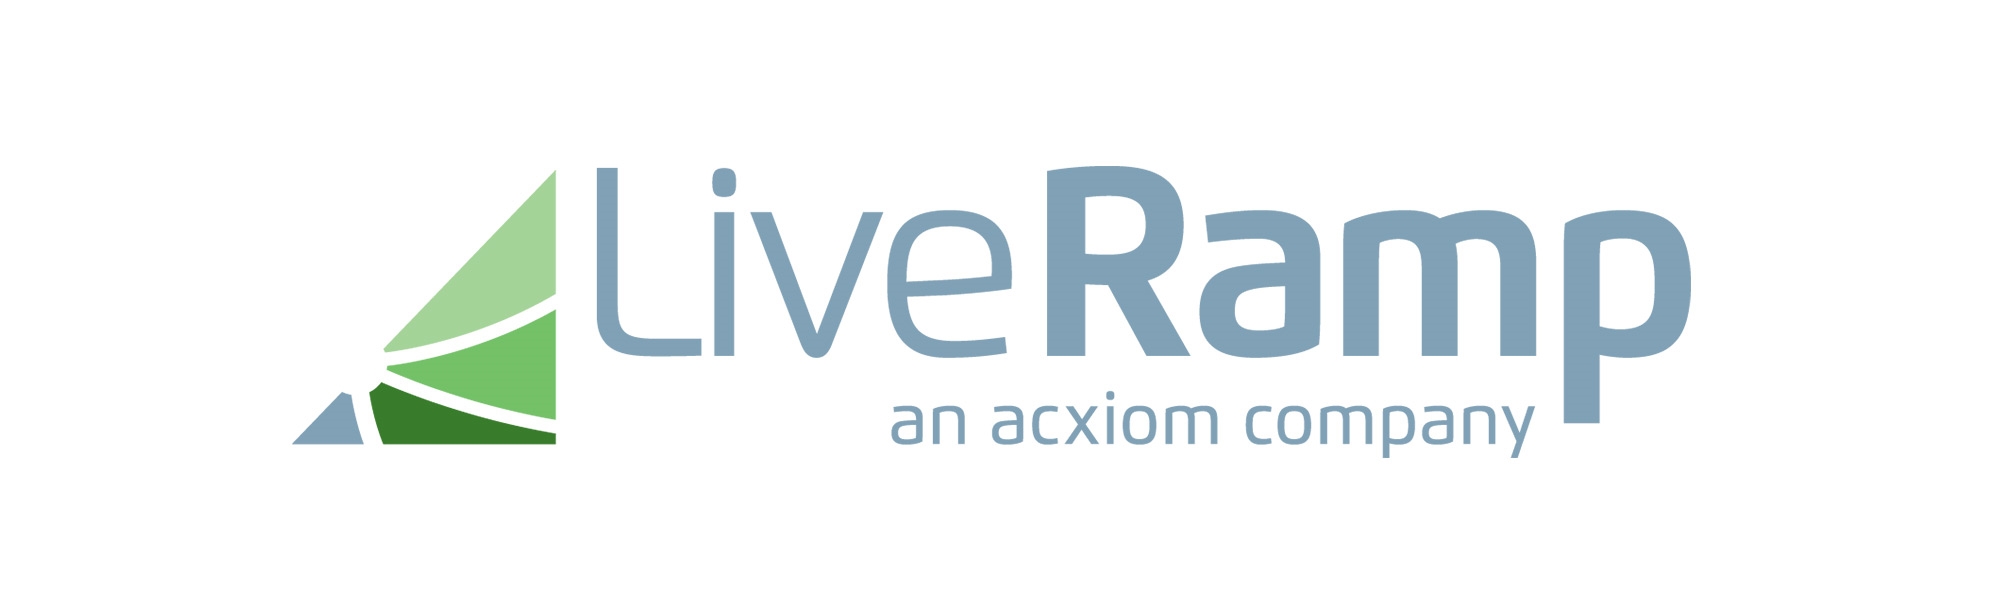 LiveRamp Partnership Brings People-Based Marketing To Bing | DeviceDaily.com